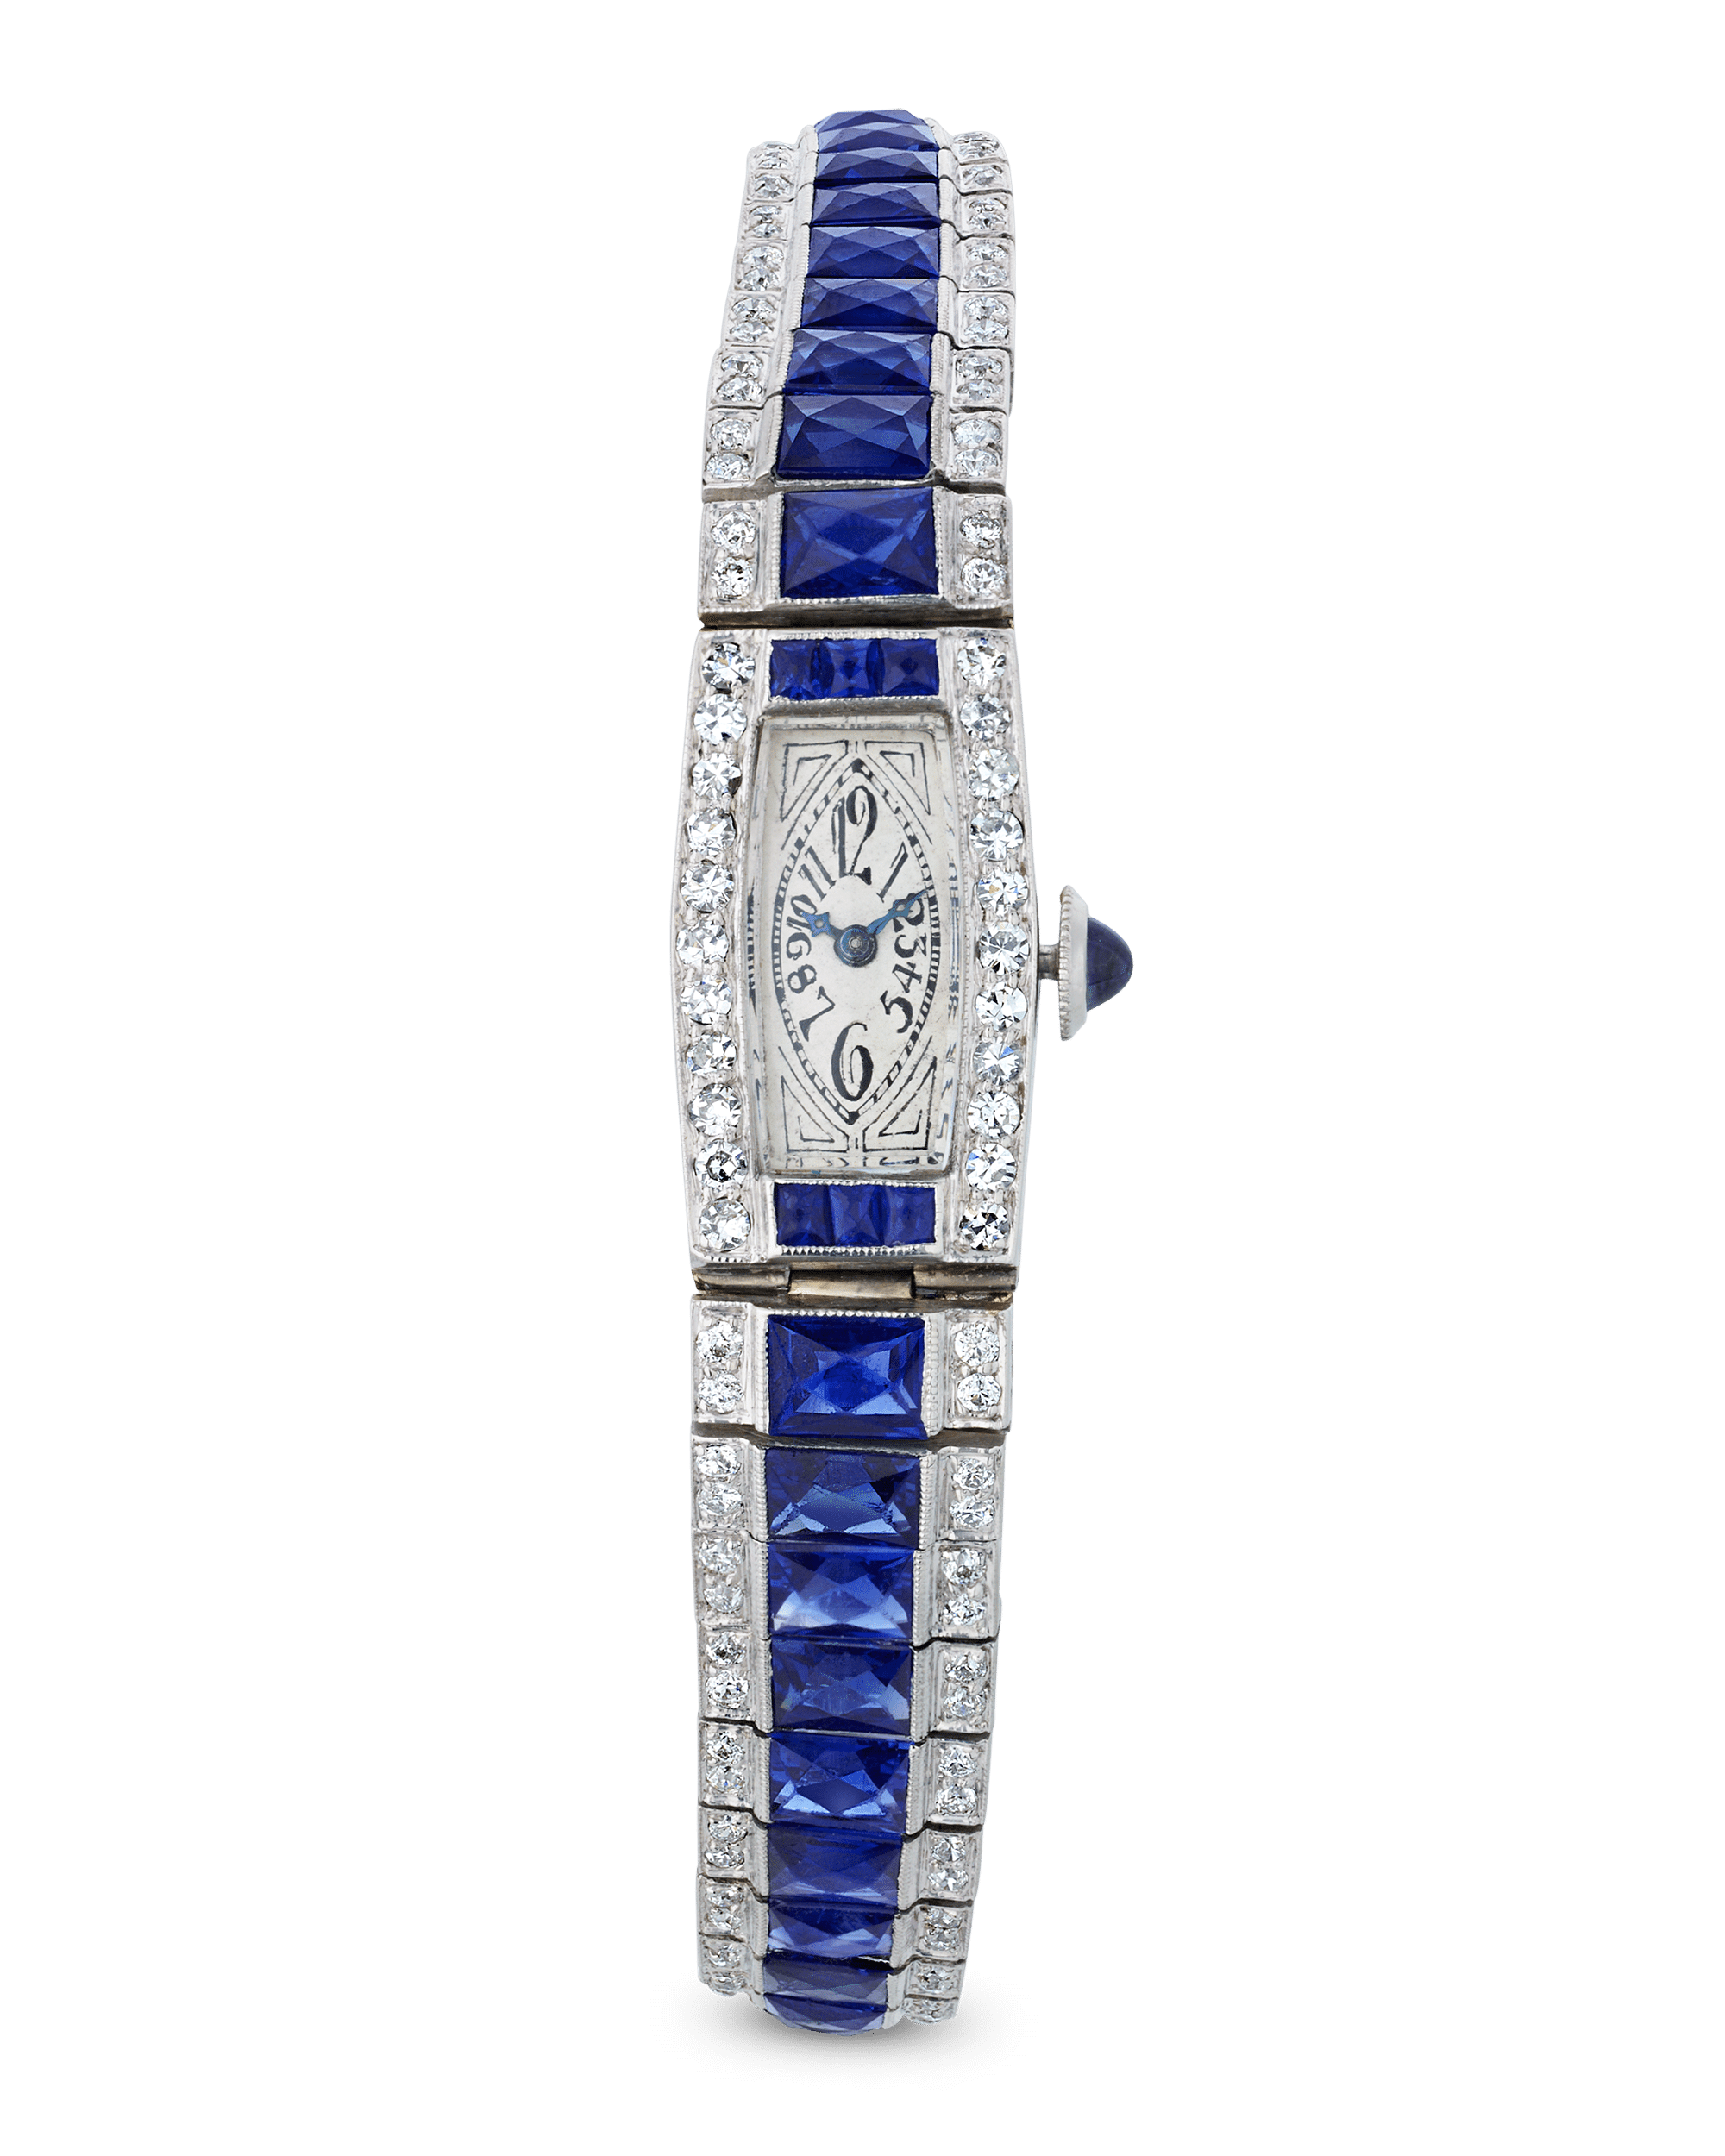 Tiffany & Co. Blue Sapphire and Diamond Watch